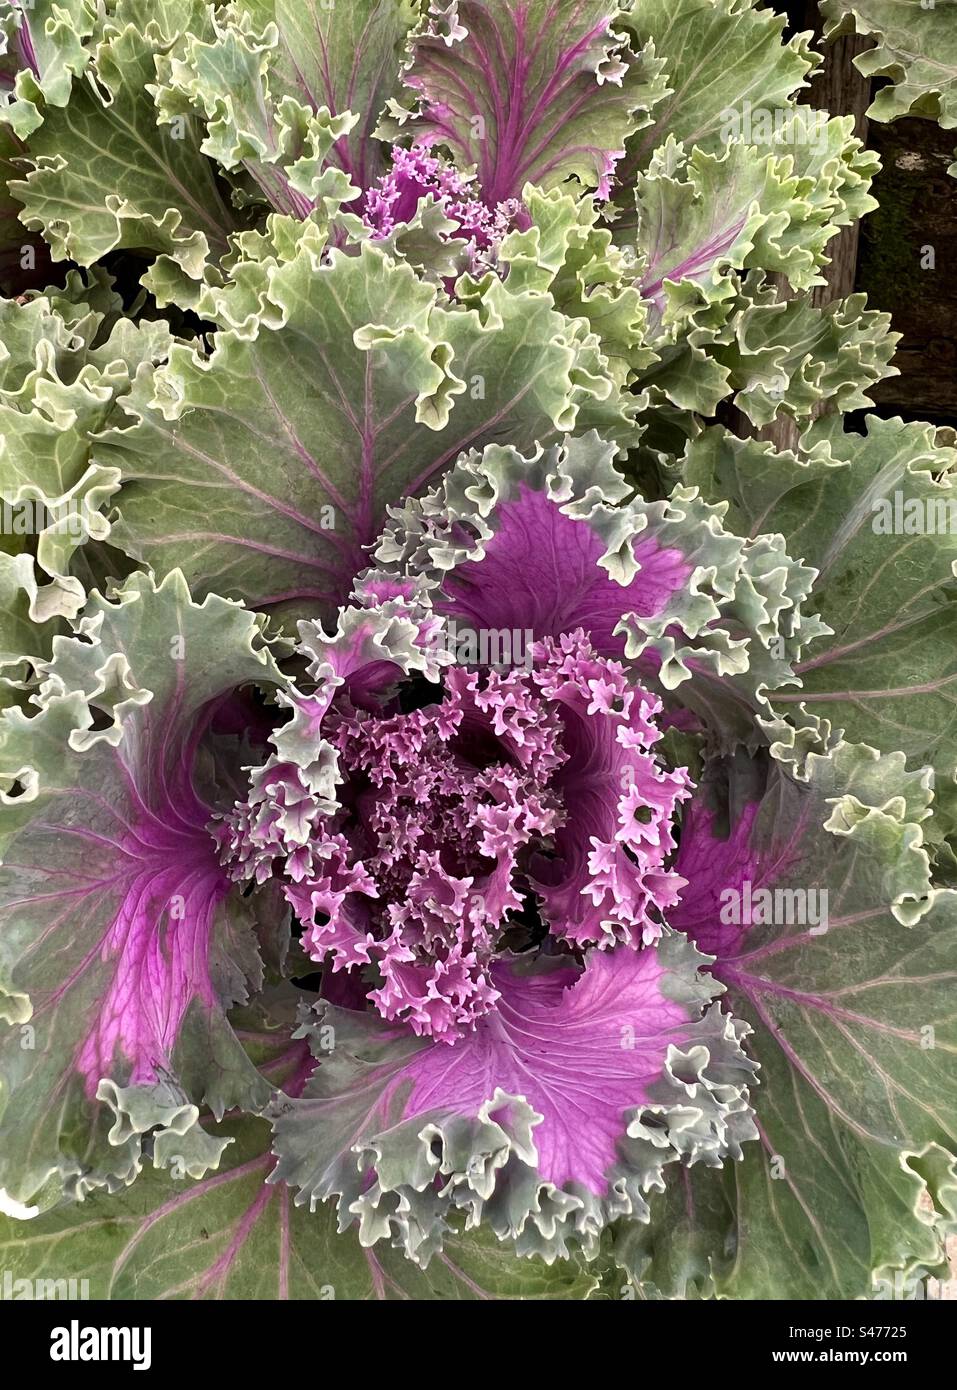 Ornamental cabbage plant Stock Photo